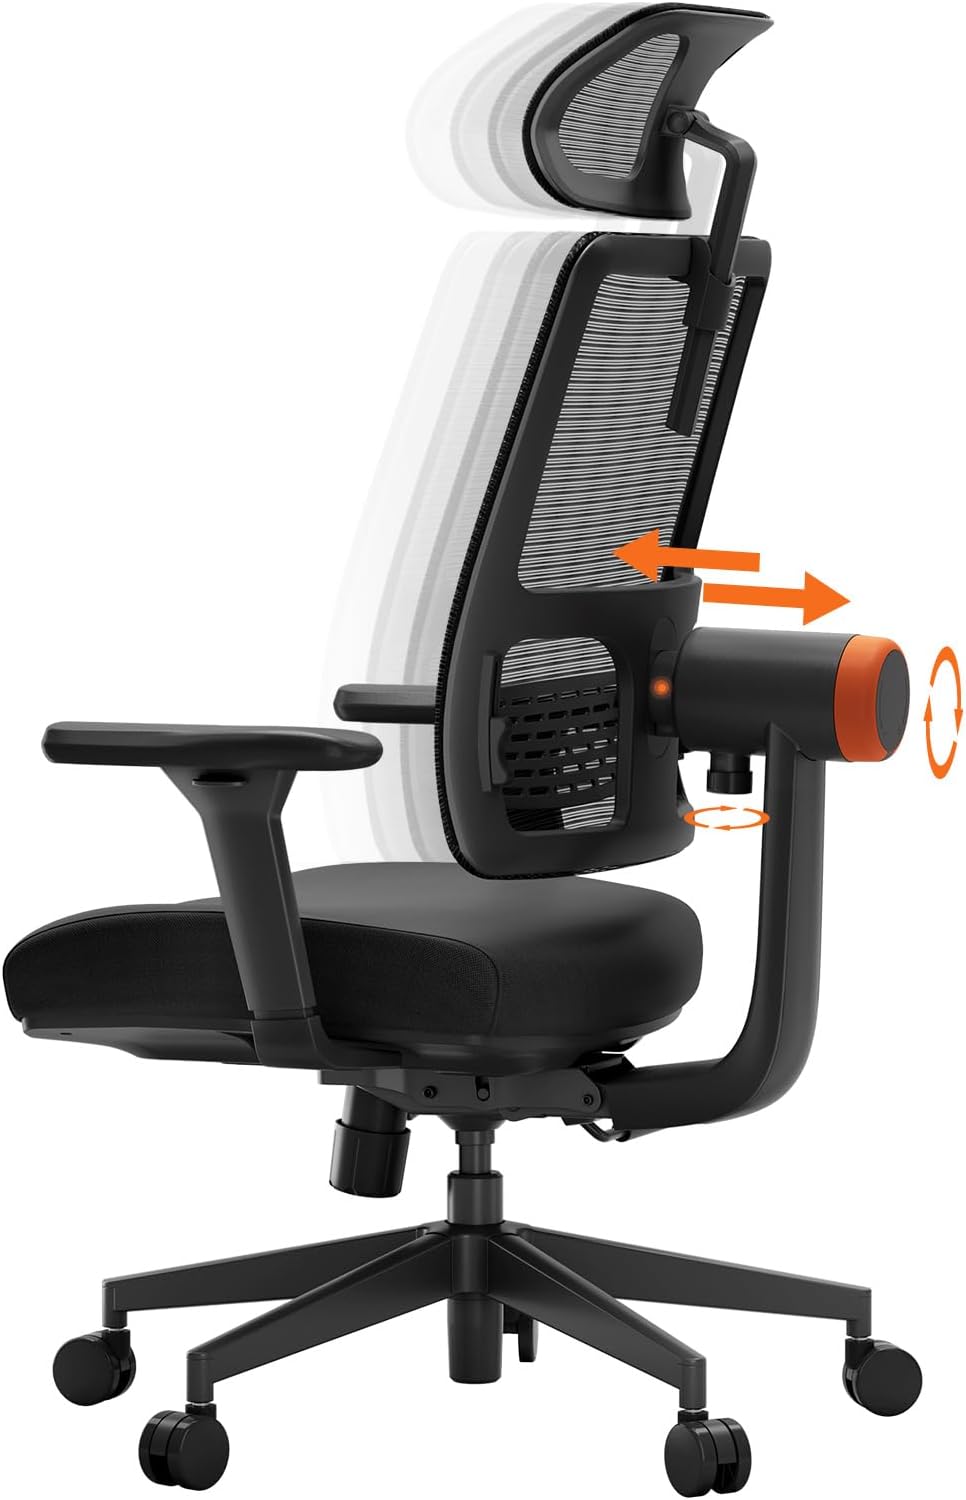 Newtral Ergonomic Home Office Chair, High Back Desk Chair with Unique Adaptive Lumbar Support, Adjustable Headrest, Seat Depth Adjustment, 96-126 Tilt Function, 4D Armrest Recliner Chair for Office